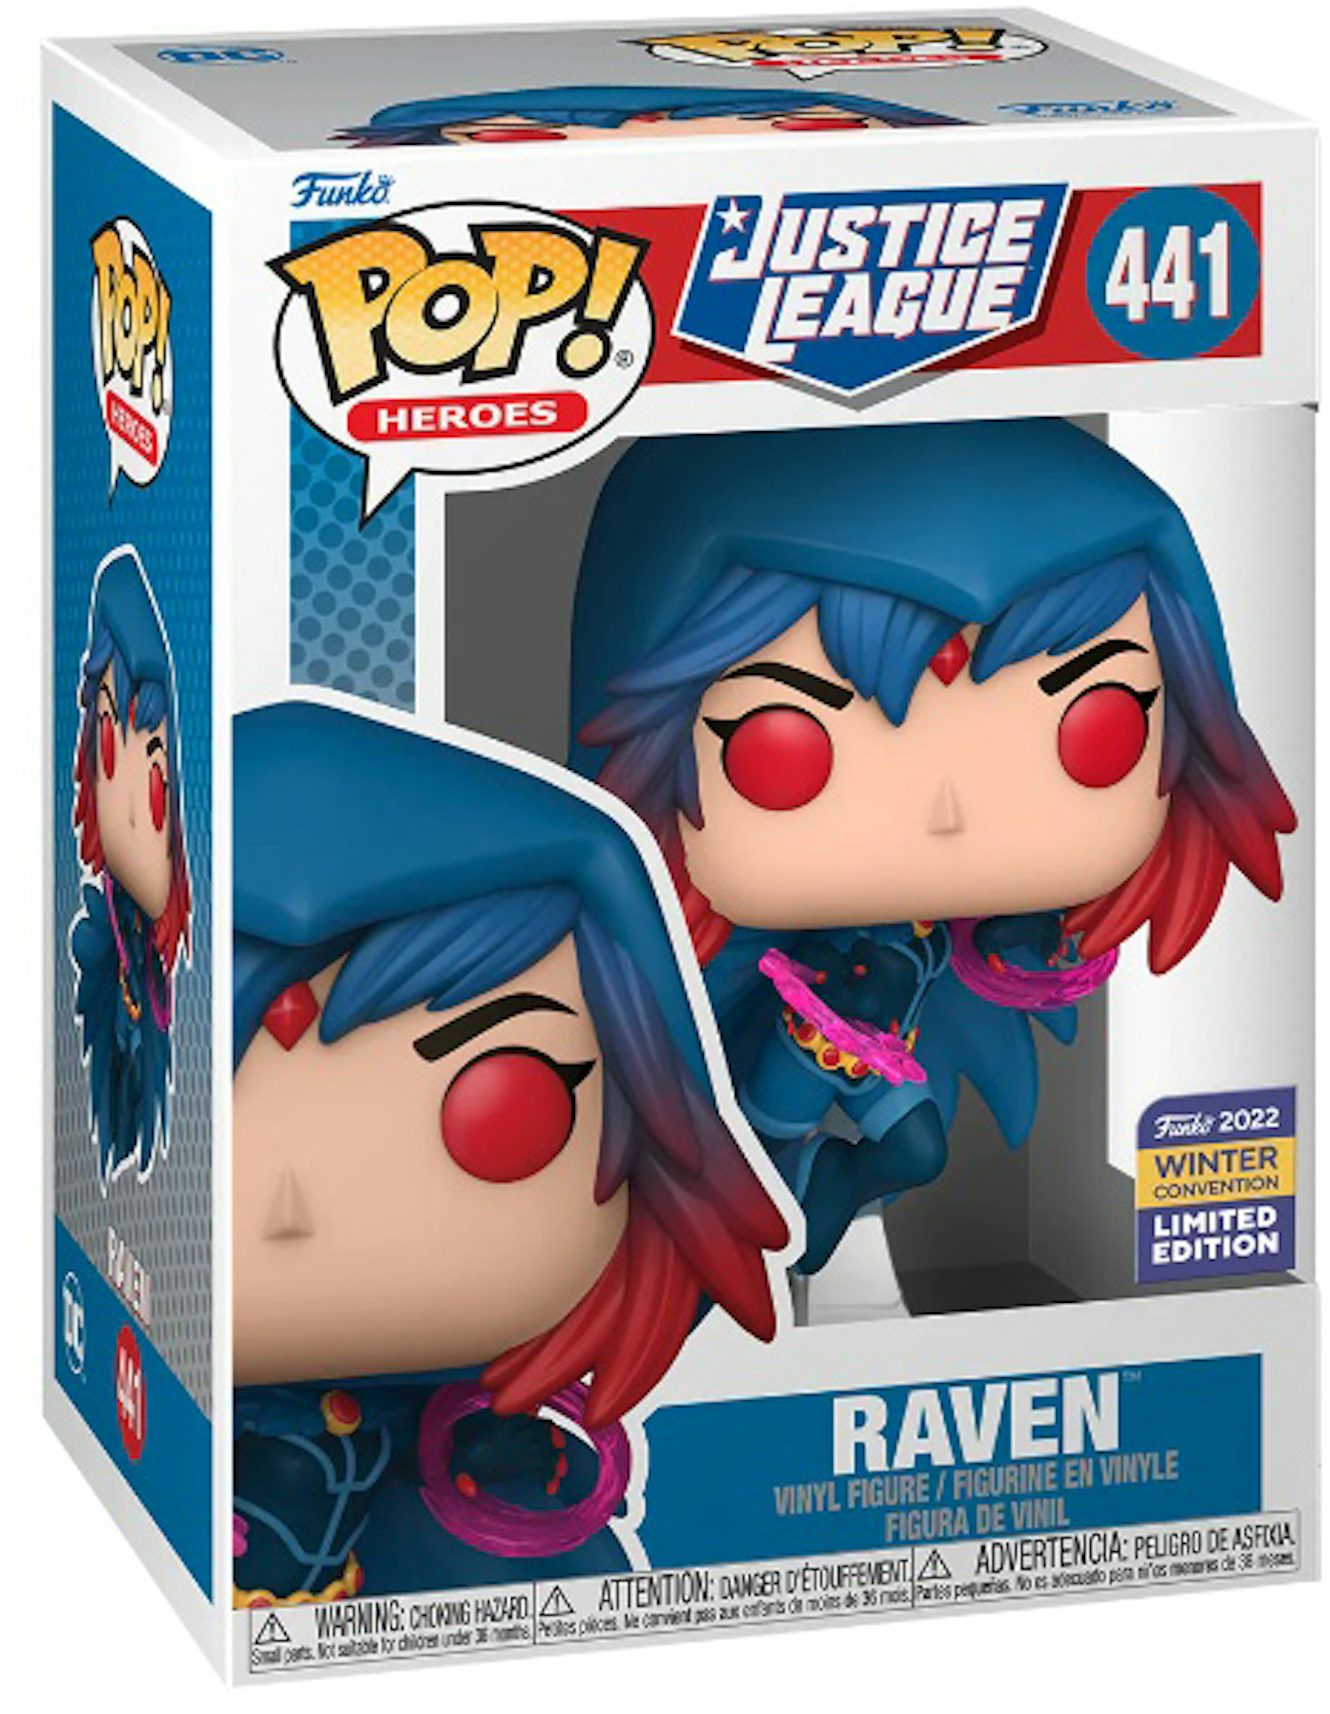 Funko Pop! Heroes Justice League Raven 2022 Winter Convention Exclusive  Figure #441 - US